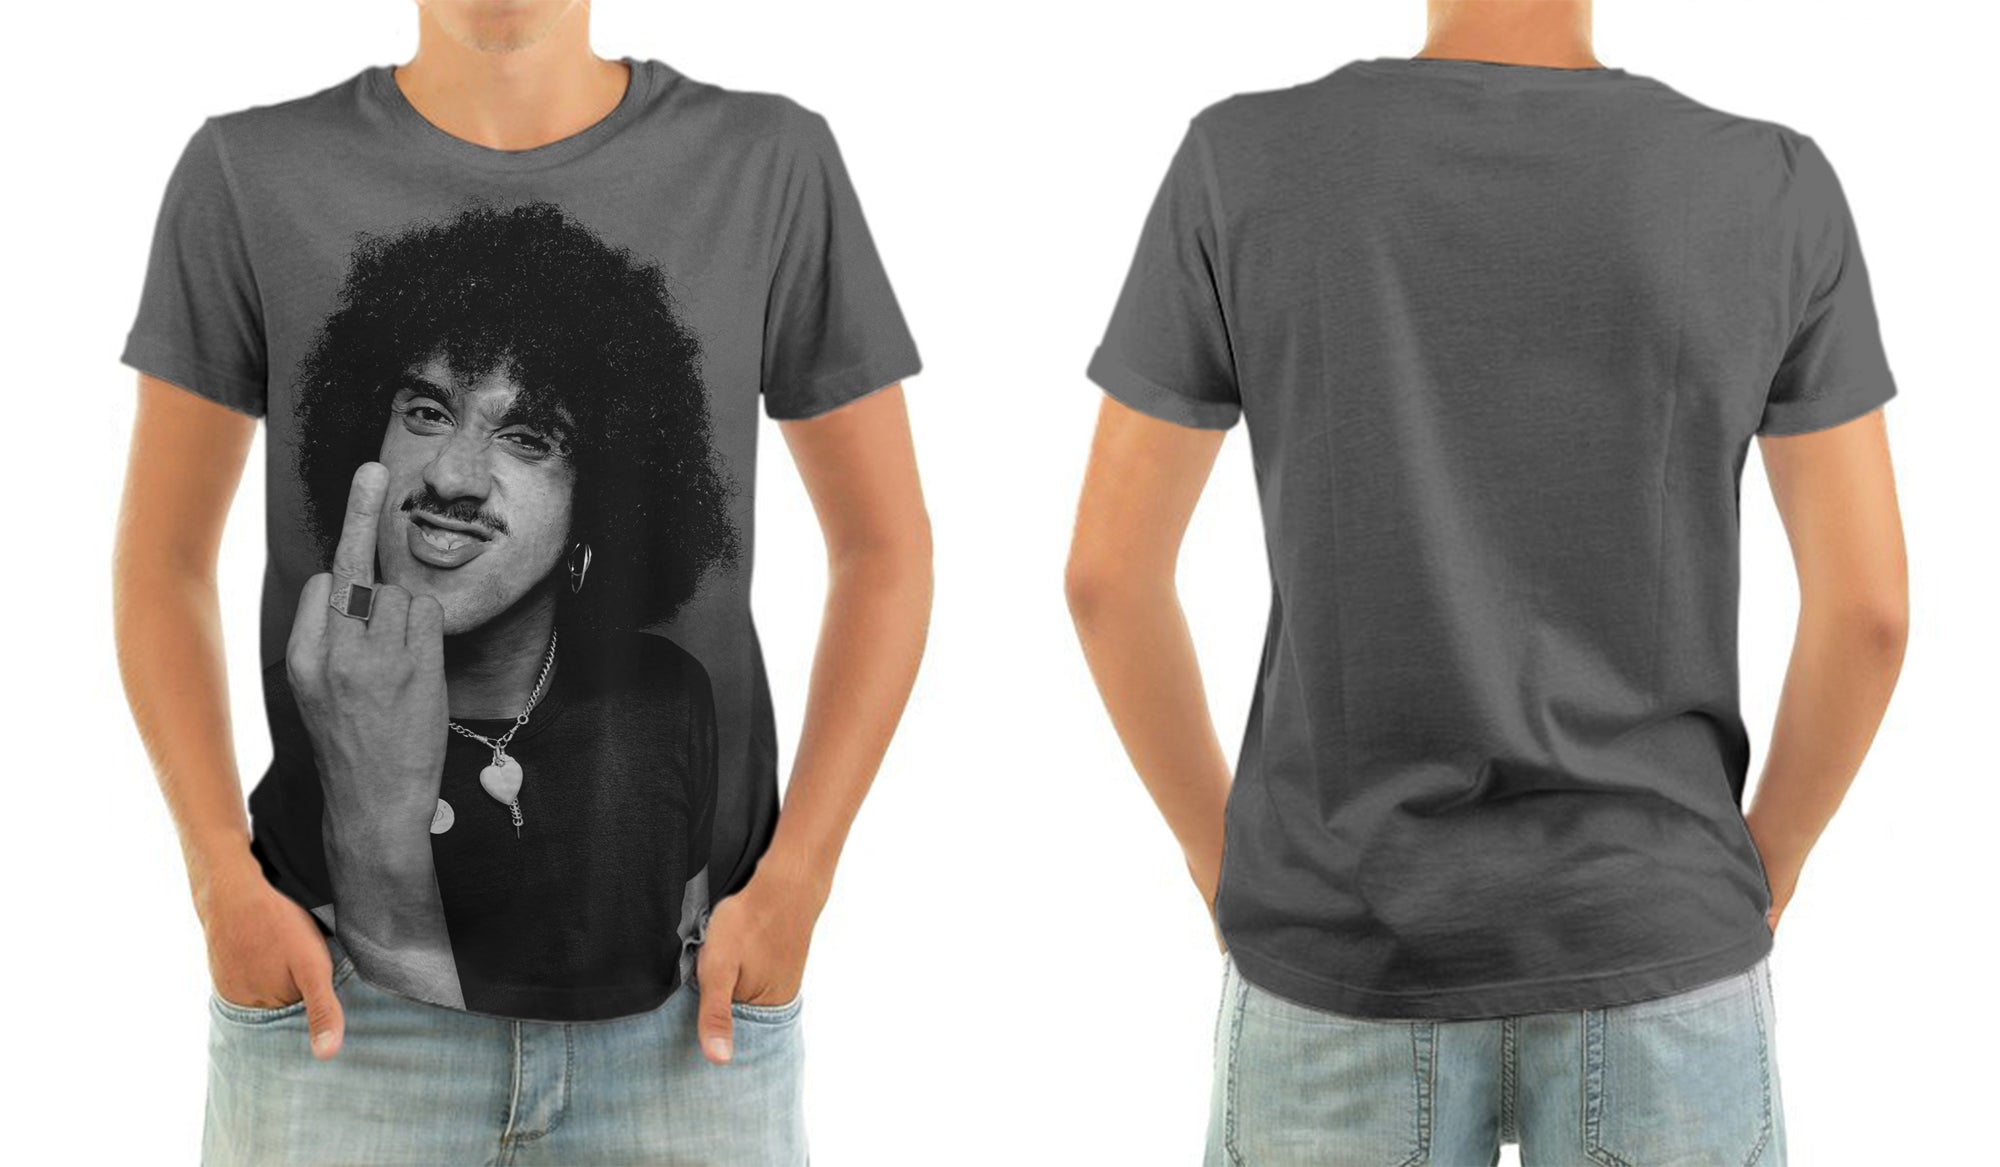 Thin Lizzy shirts – Bornrocker Brand